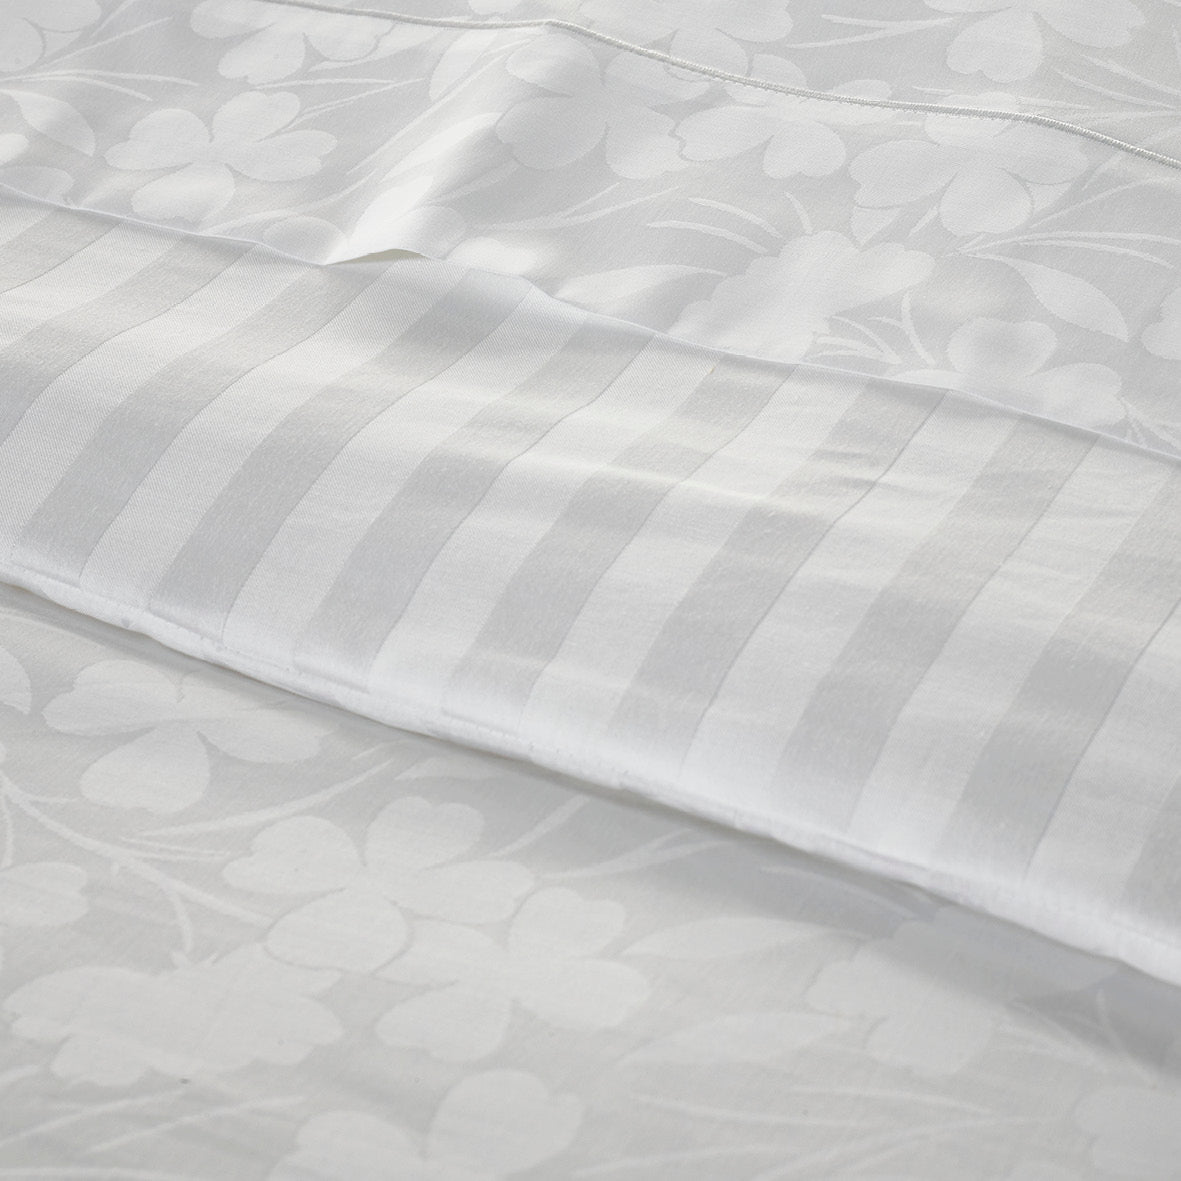 Duvet cover + pillowcase baby in cotton satin - Jacquard woven - Petites Fleurs white